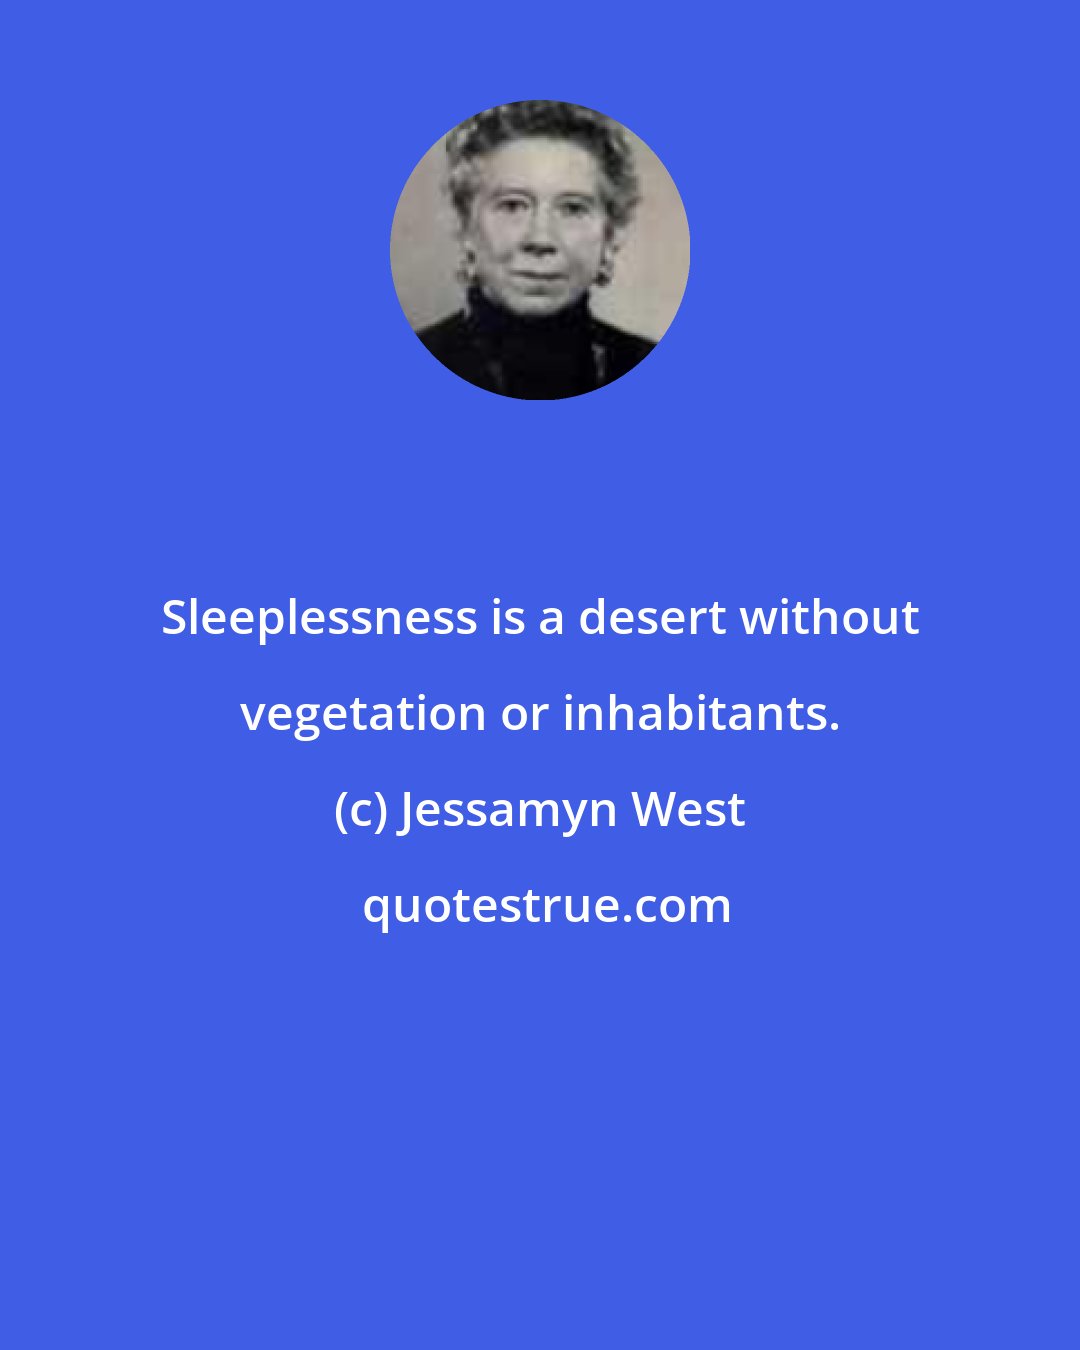 Jessamyn West: Sleeplessness is a desert without vegetation or inhabitants.